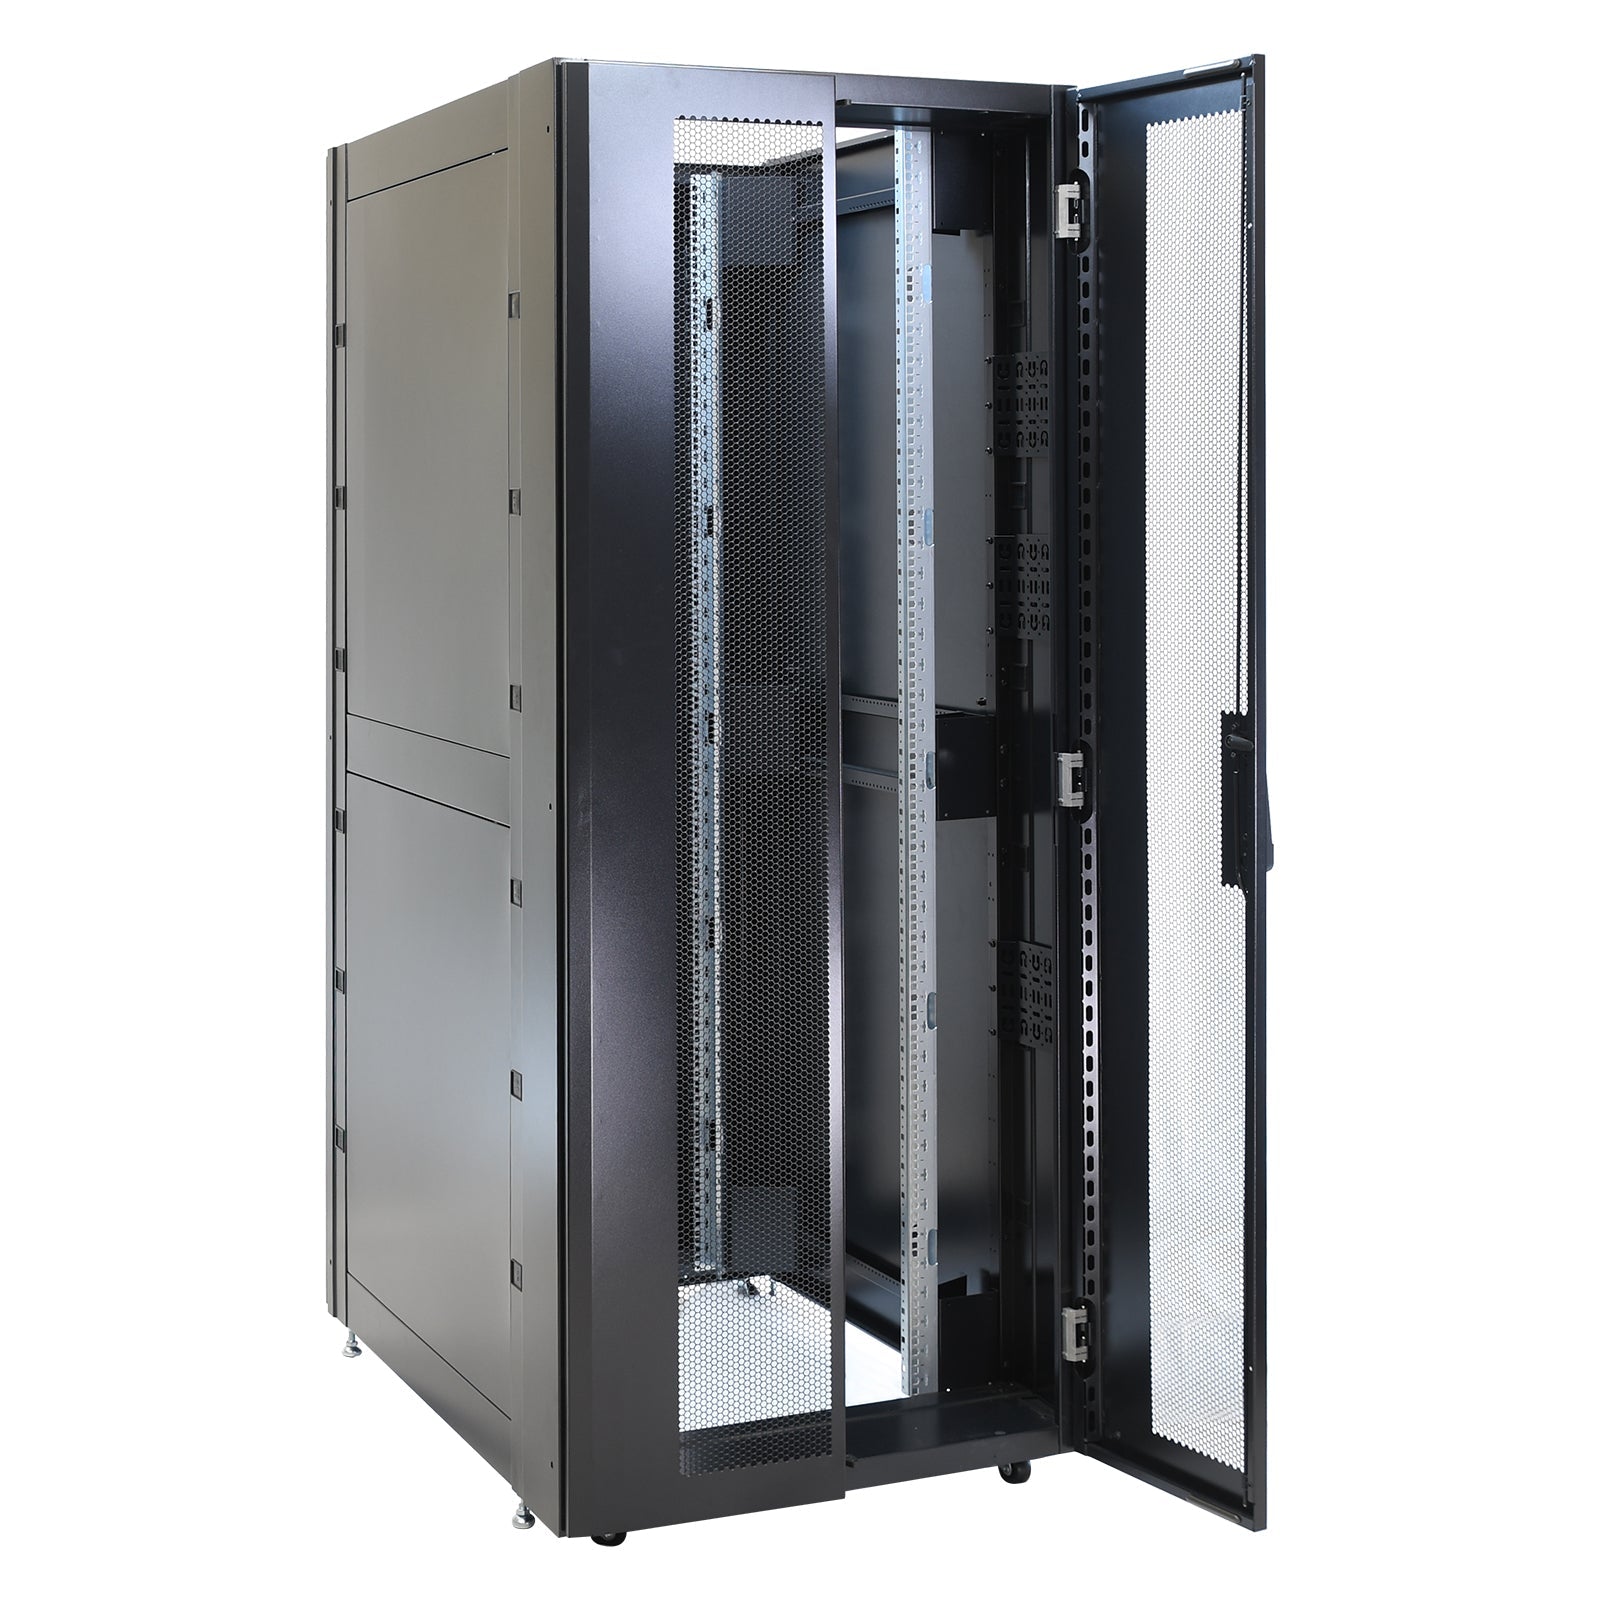 Aeons NetMax PF Seires 42U Premium Server Rack Enclosure Cabinet, Server-Depth Extra-Wide, Secure Modular Data Center